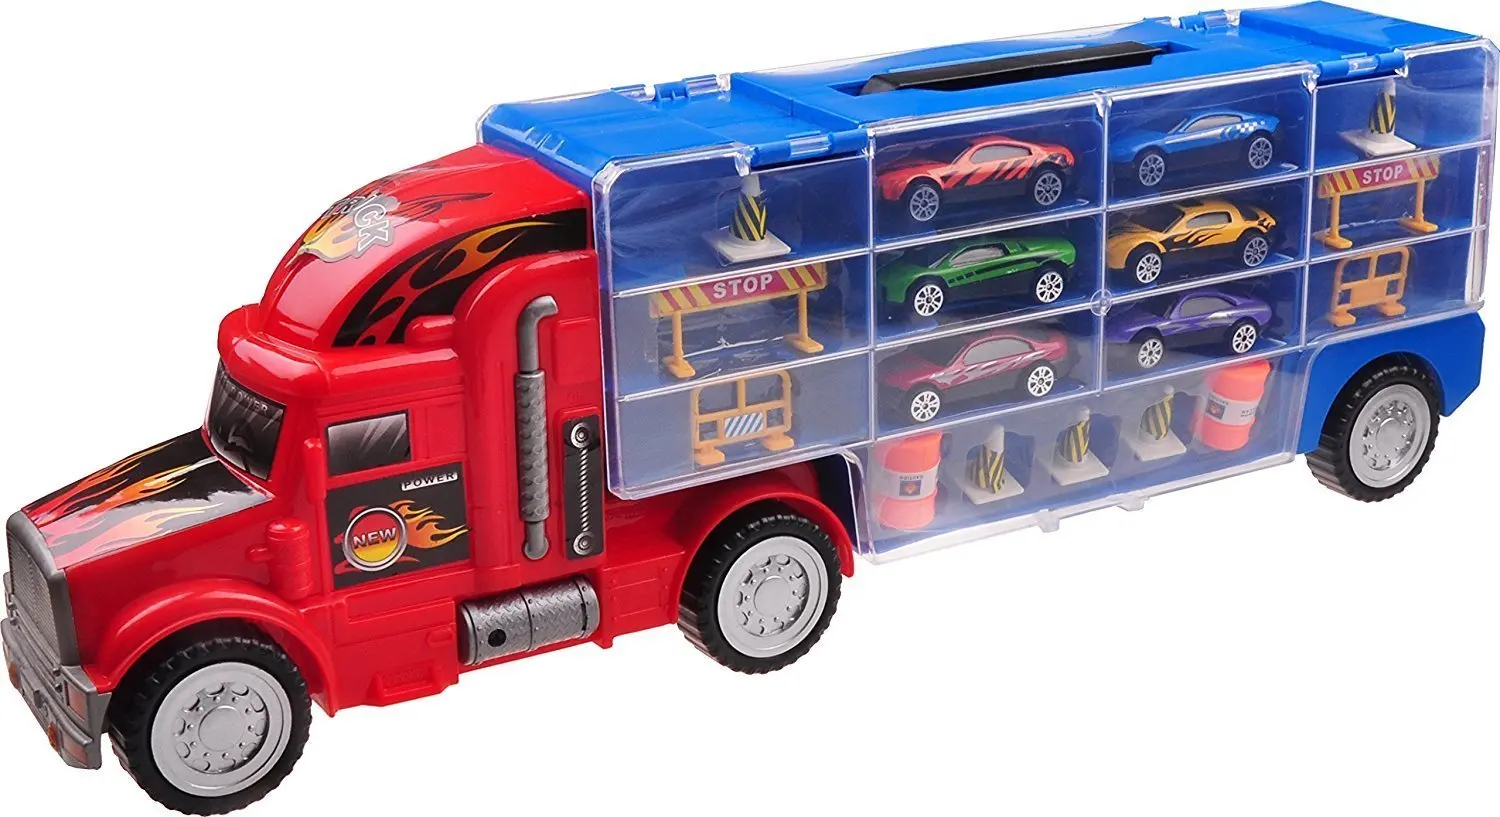 Truck toy cars. Игрушка грузовик автовоз. Transporter Truck camion de transport игрушка. Детские игрушки интернет магазин Москва автотранспорт. Игрушки Shenzhen Toys Truck Series.